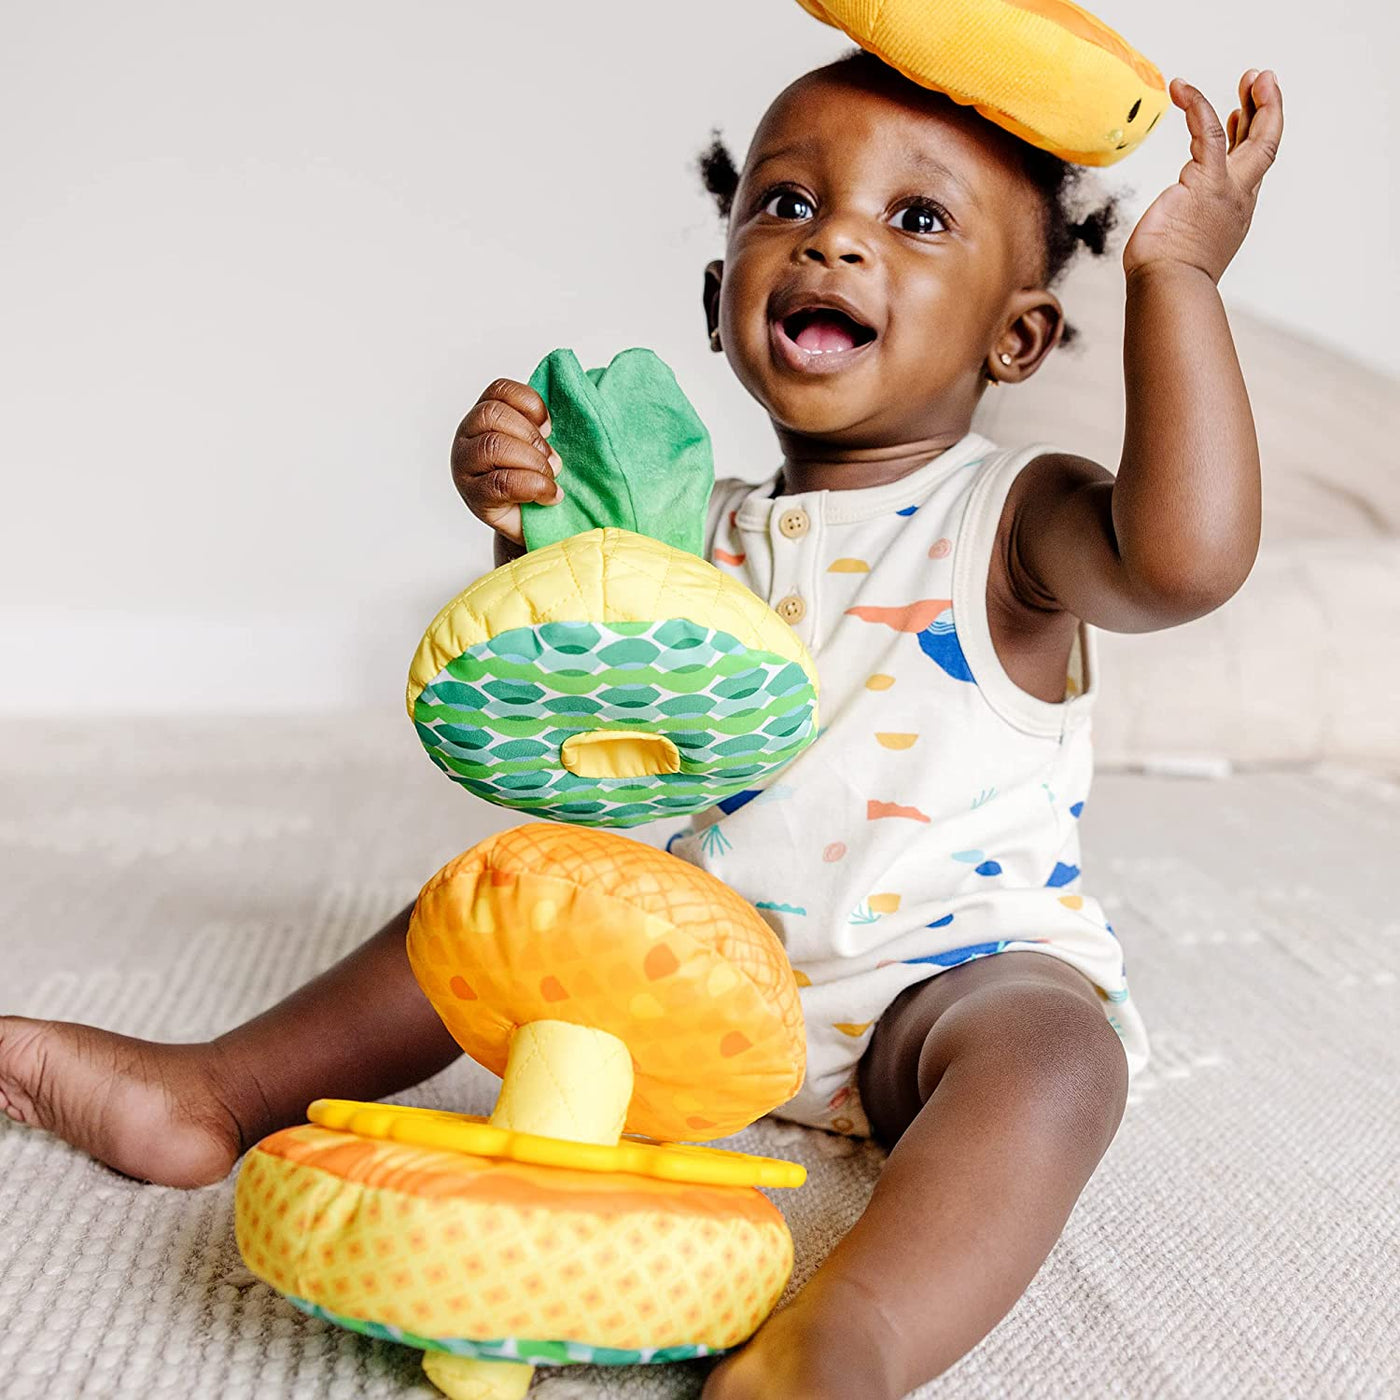 Melissa & DougTake-Along Clip-On Infant ToyStyle: Bubble Tea Take Along Baby ToyEarthlets